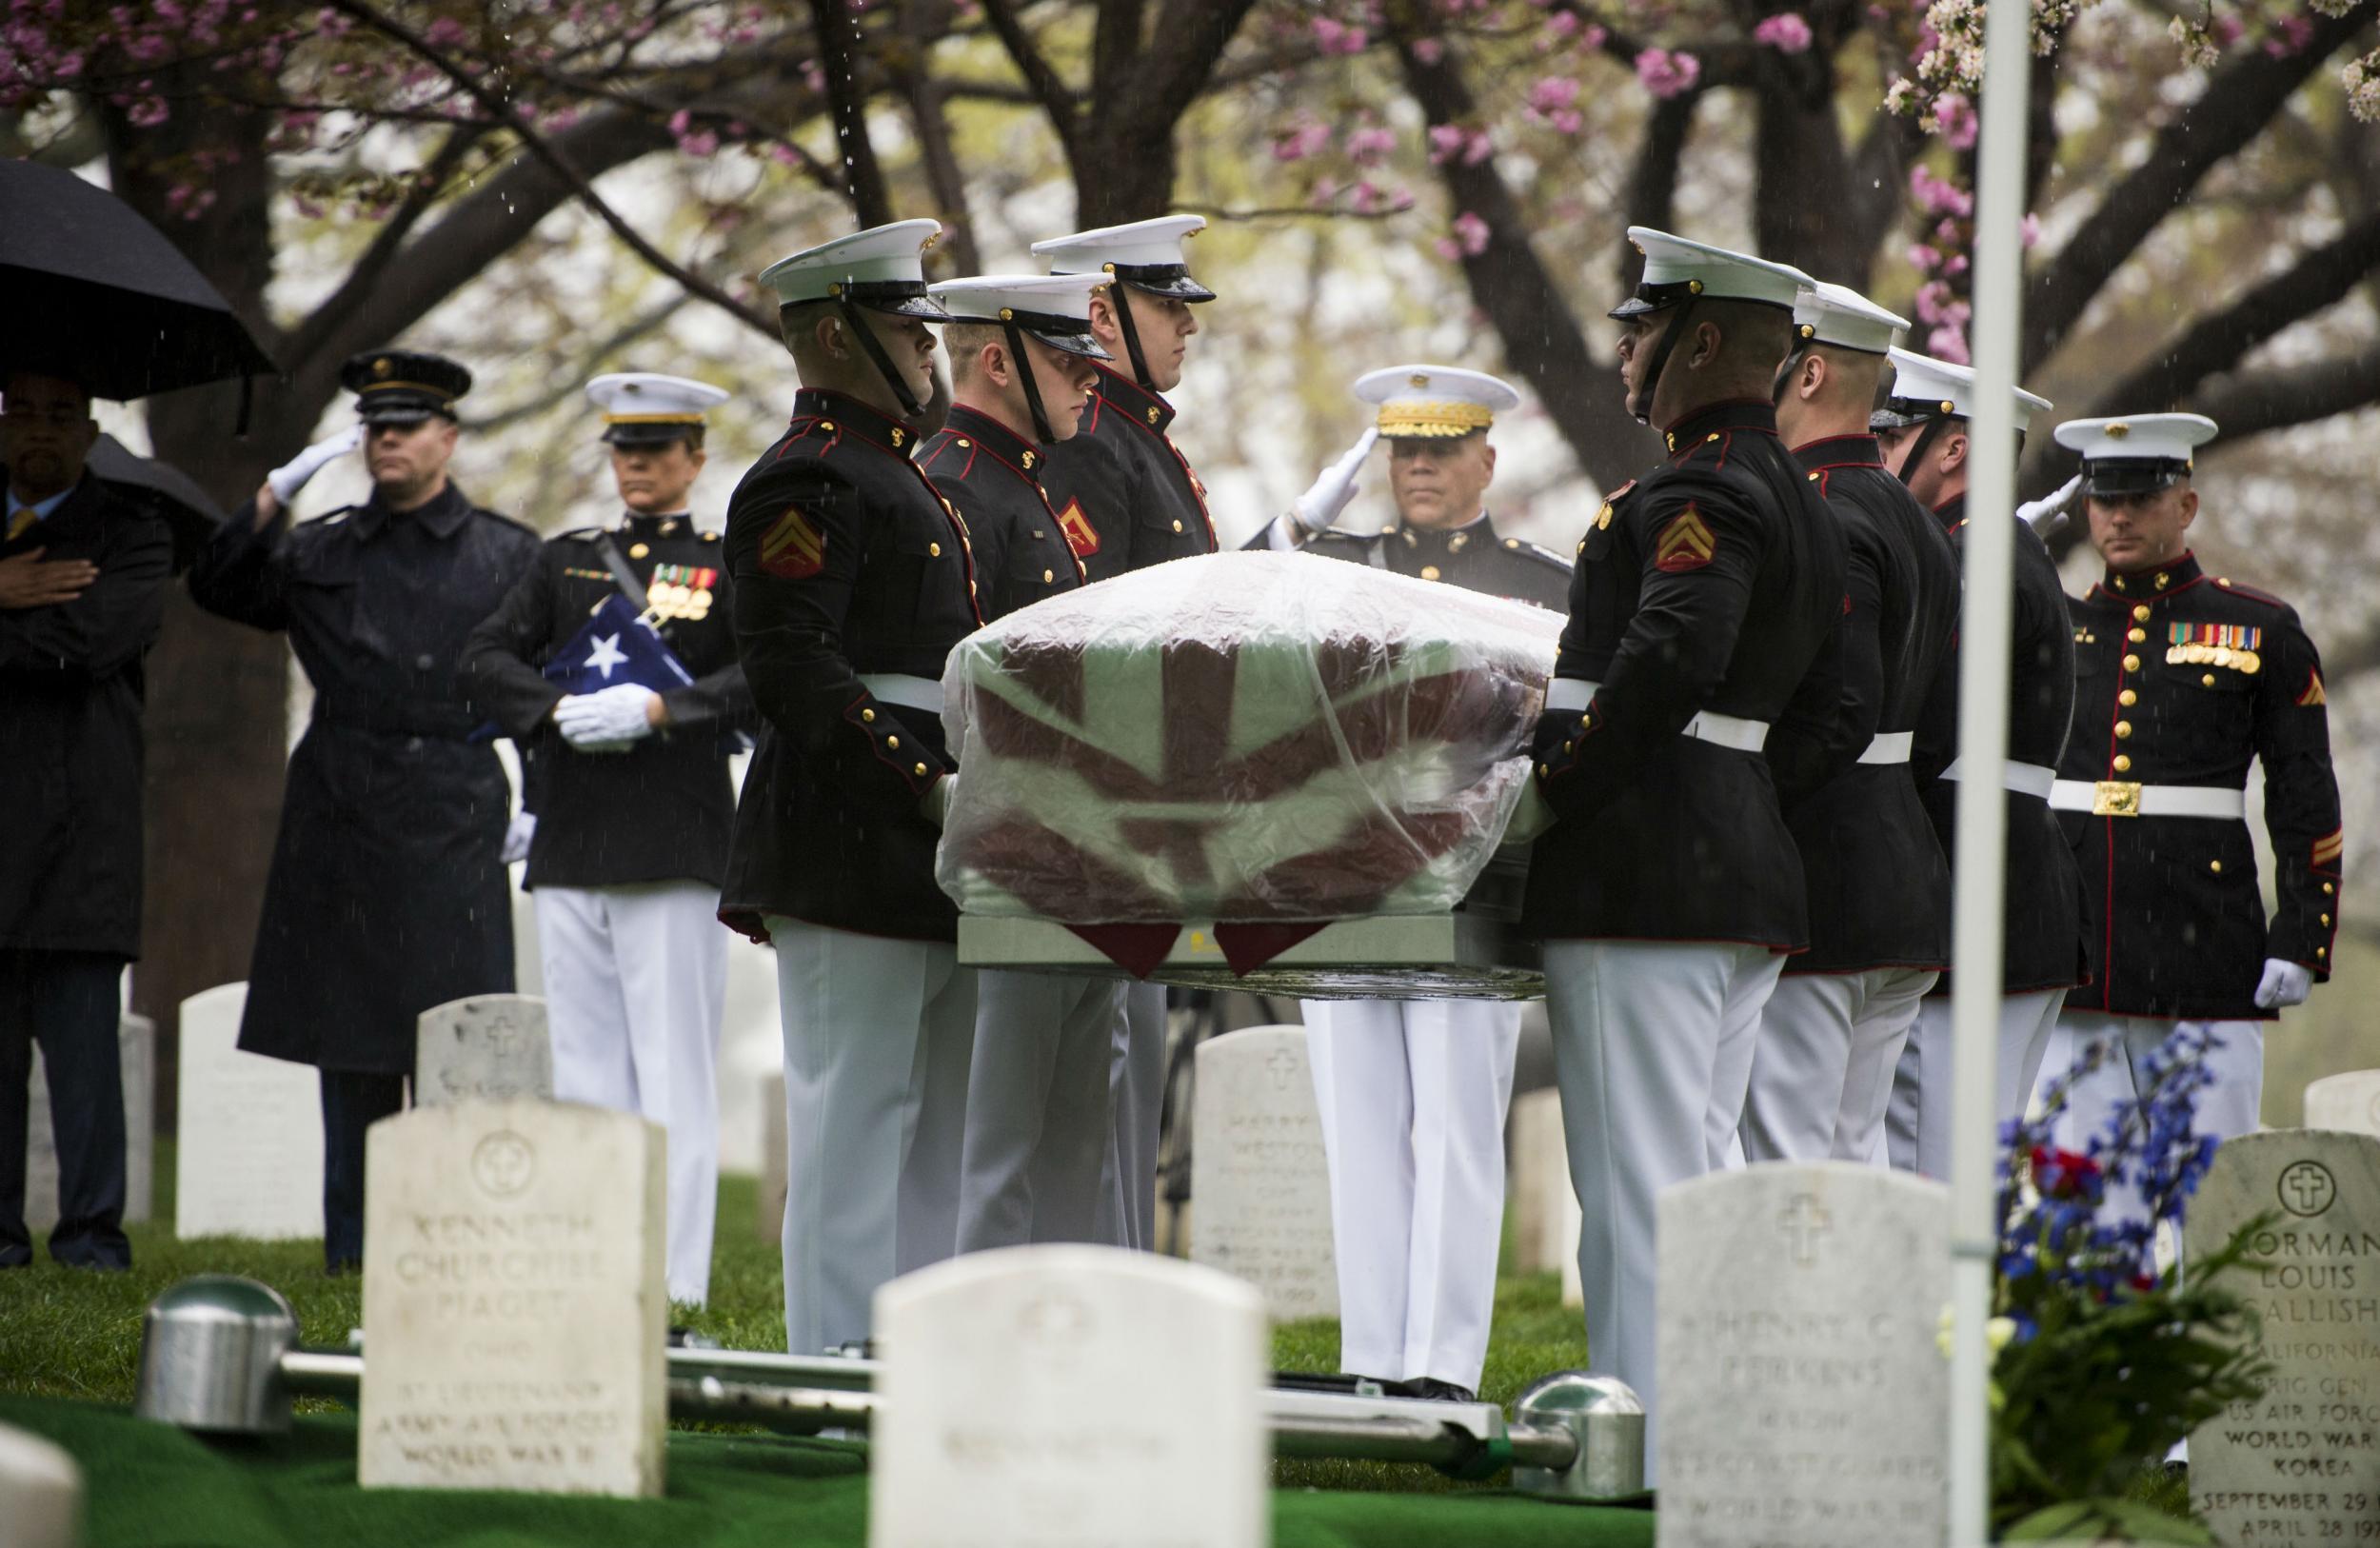 Glenn was buried at Arlington Cemetery in Washington